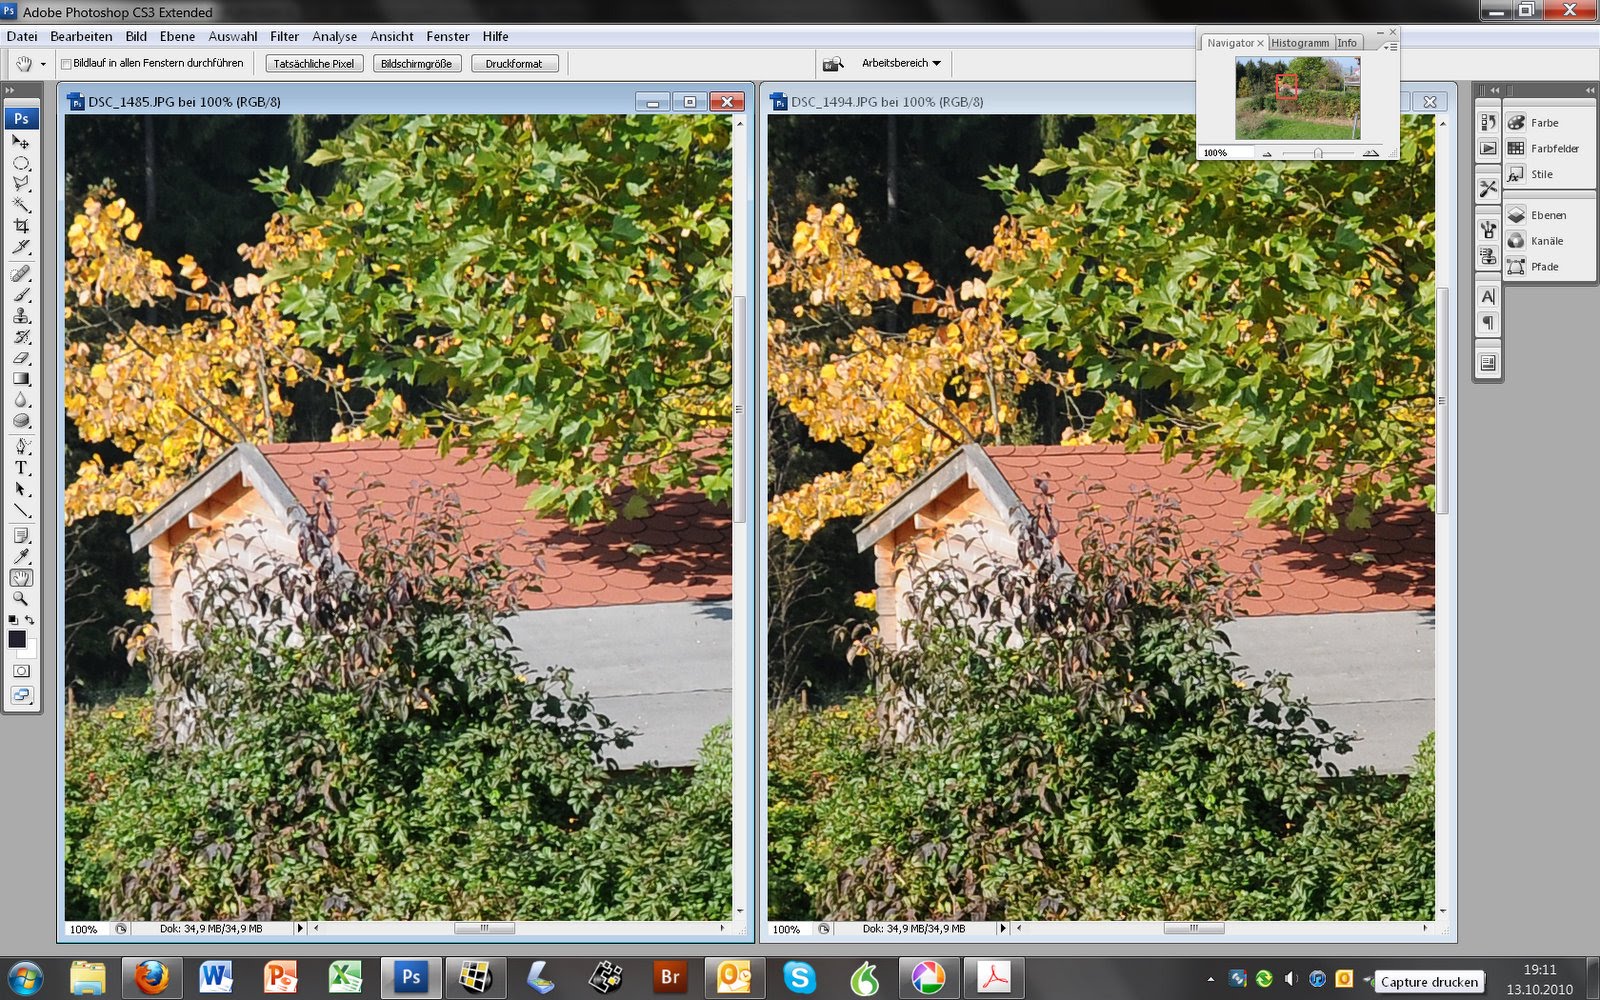 Fullscreen+capture+13.10.2010+191112.jpg